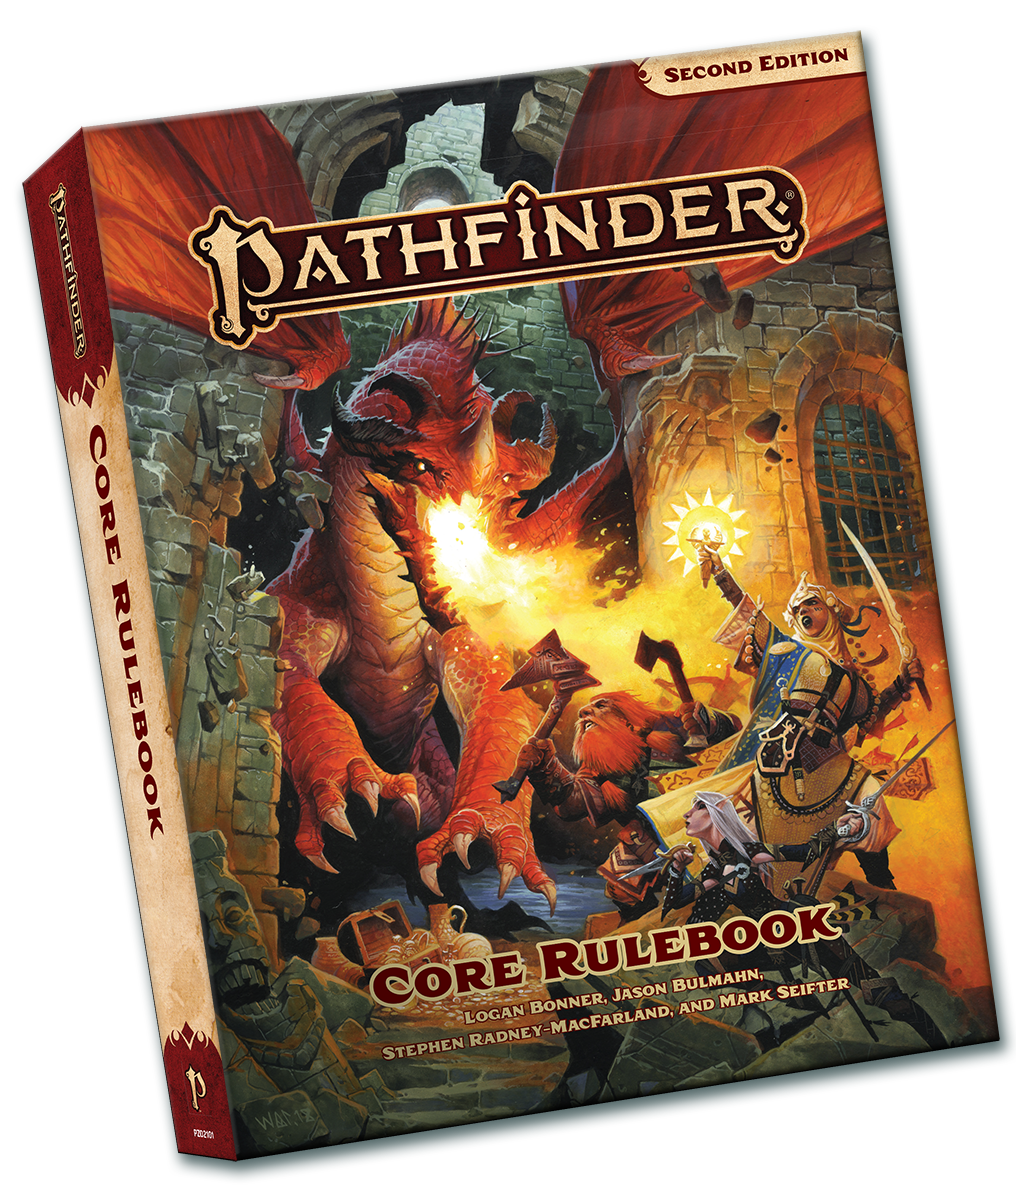 Pathfinder 2E Secrets of Magic Pocket Edition